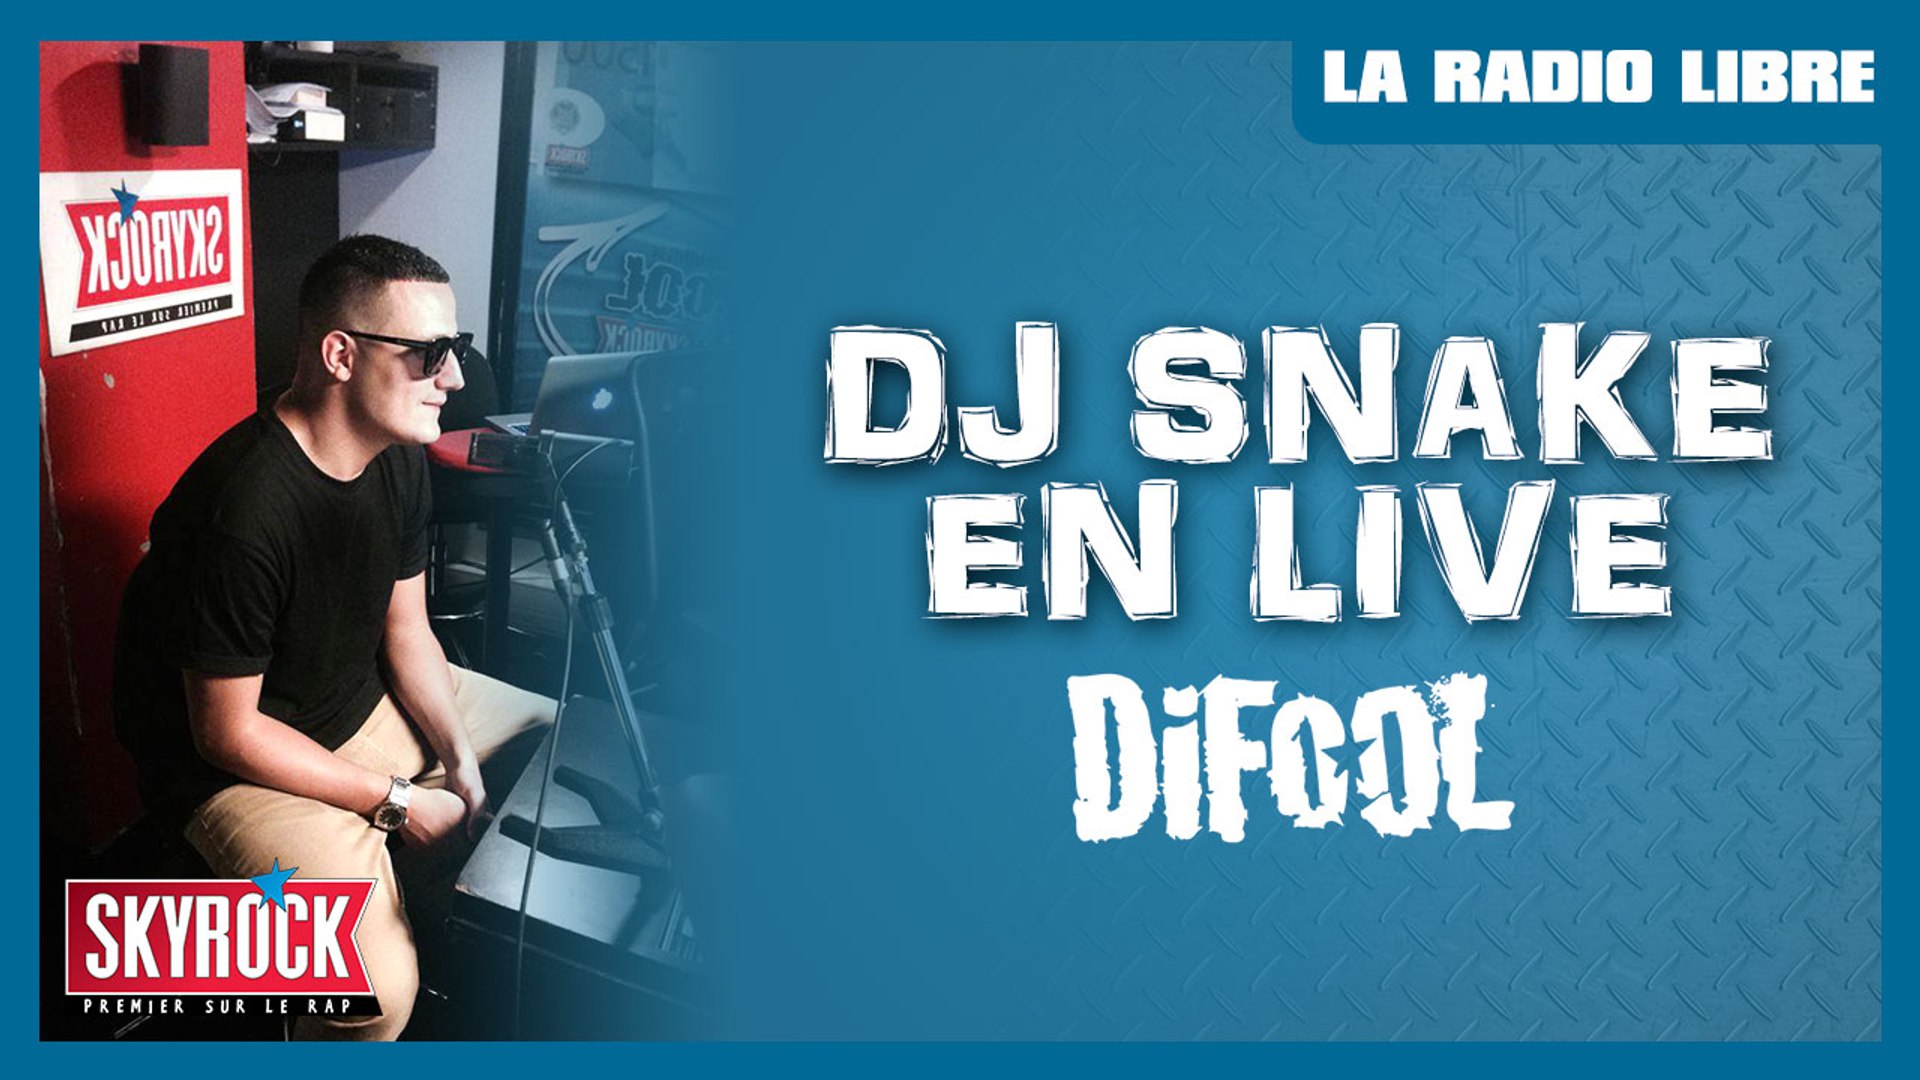 Mix de Dj Snake dans la Radio Libre de Difool ! - Vidéo Dailymotion